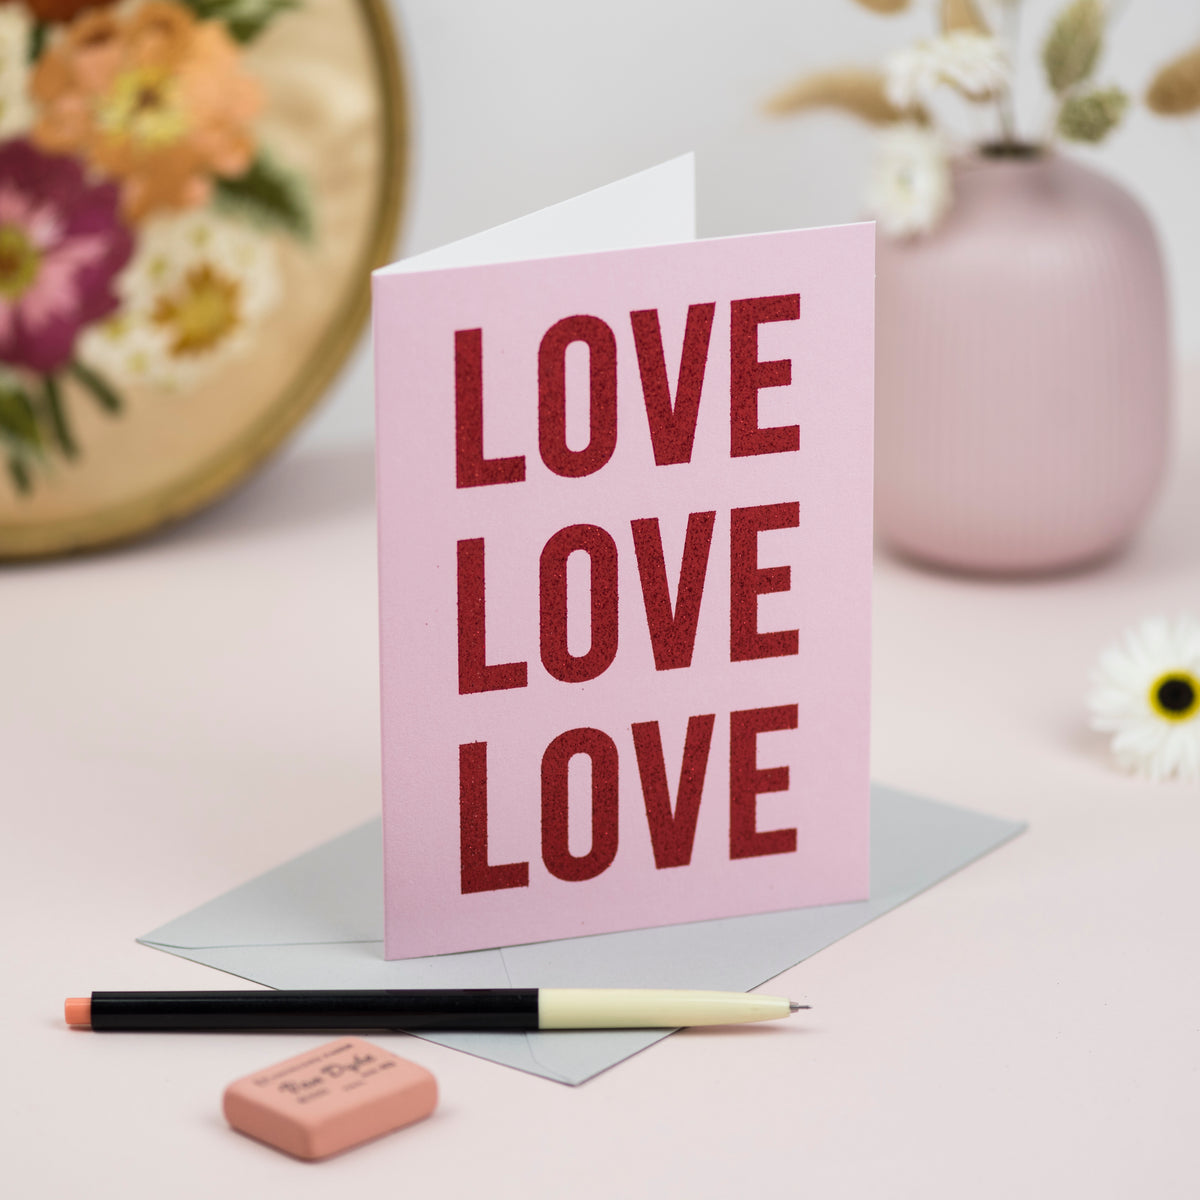 'LOVE LOVE LOVE' Greetings Card - Biodegradable Glitter